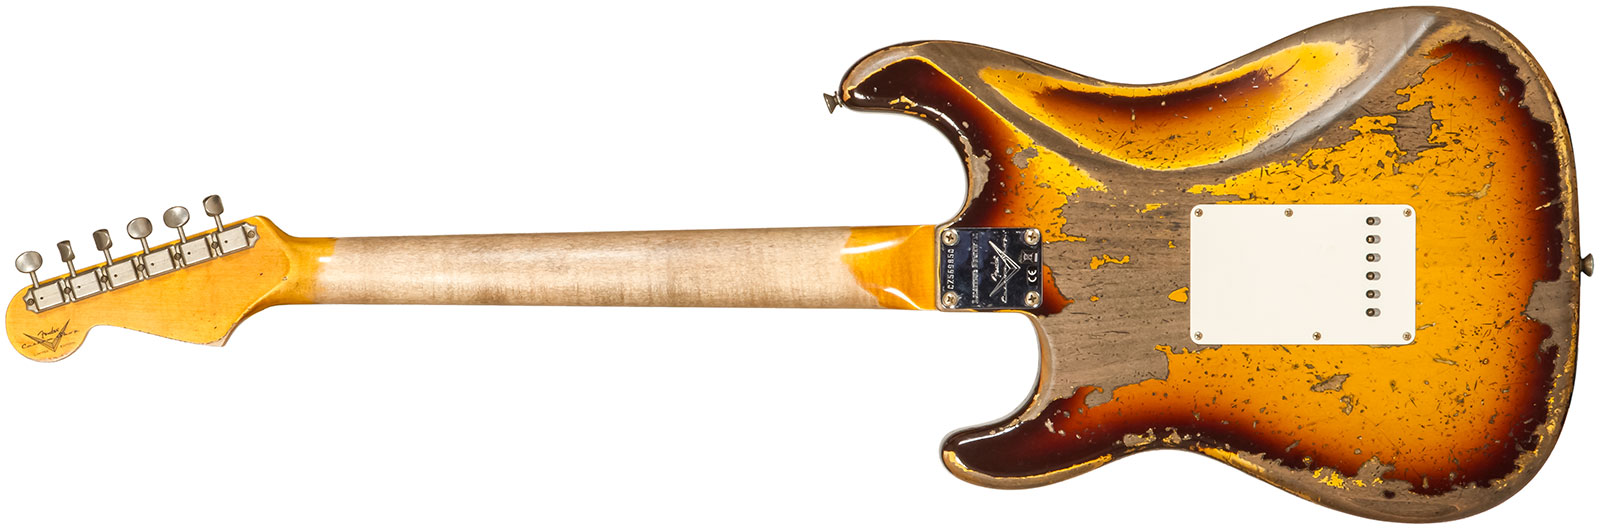 Fender Custom Shop Strat 1959 3s Trem Rw #cz569850 - Super Heavy Relic Aged Chocolate 3-color Sunburst - Str shape electric guitar - Variation 1